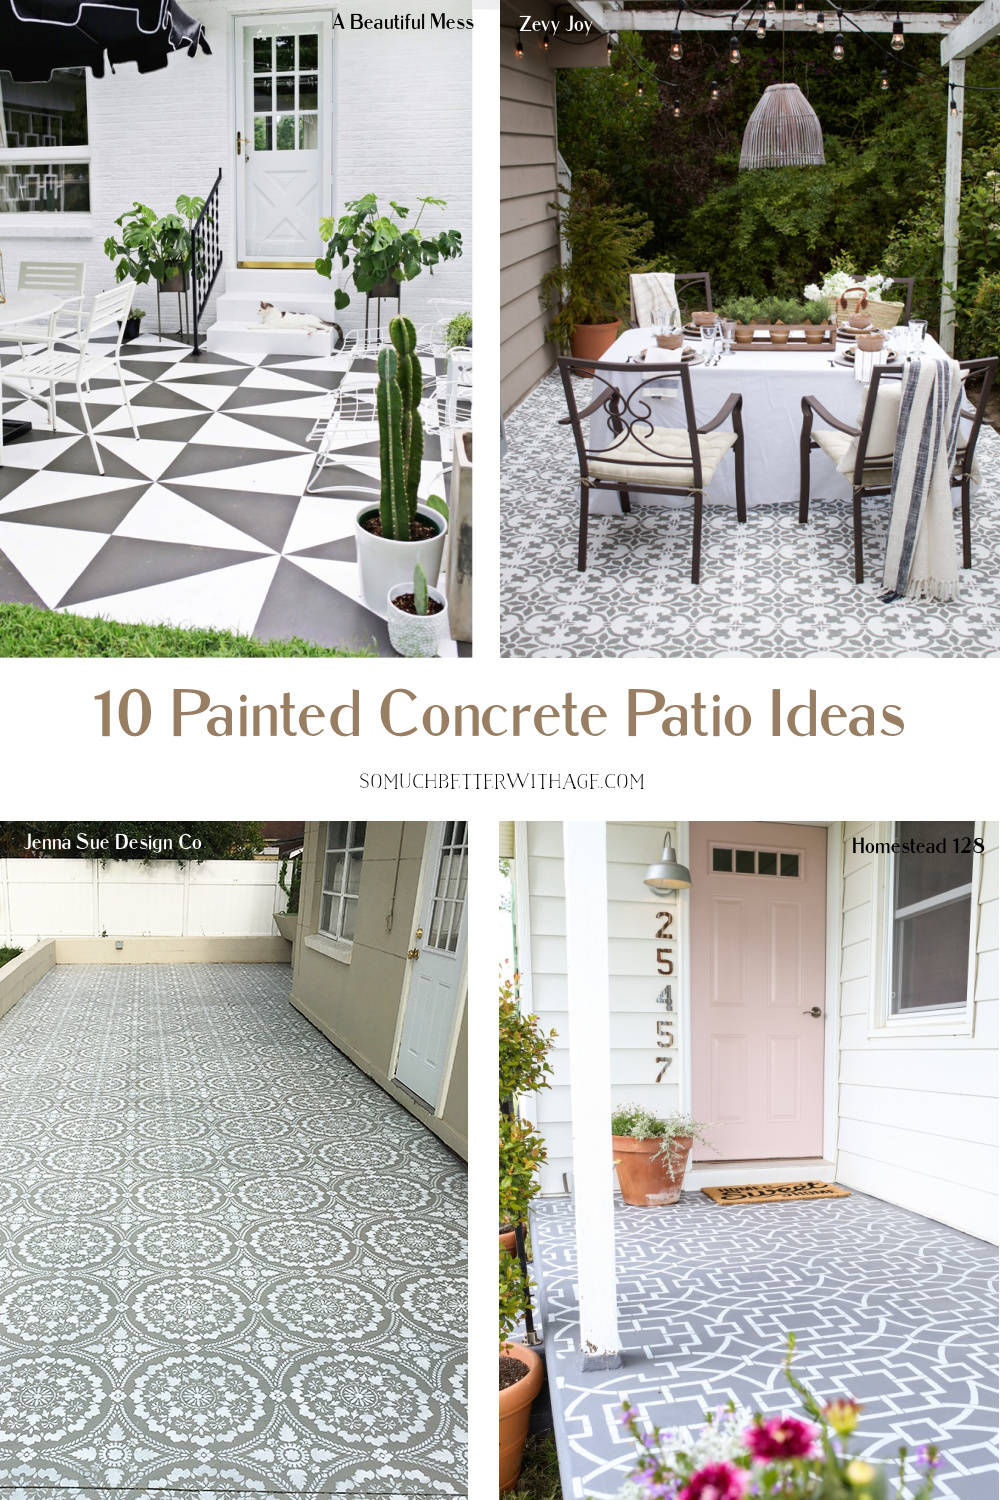 10 Painted Concrete Patio / Floor Ideas